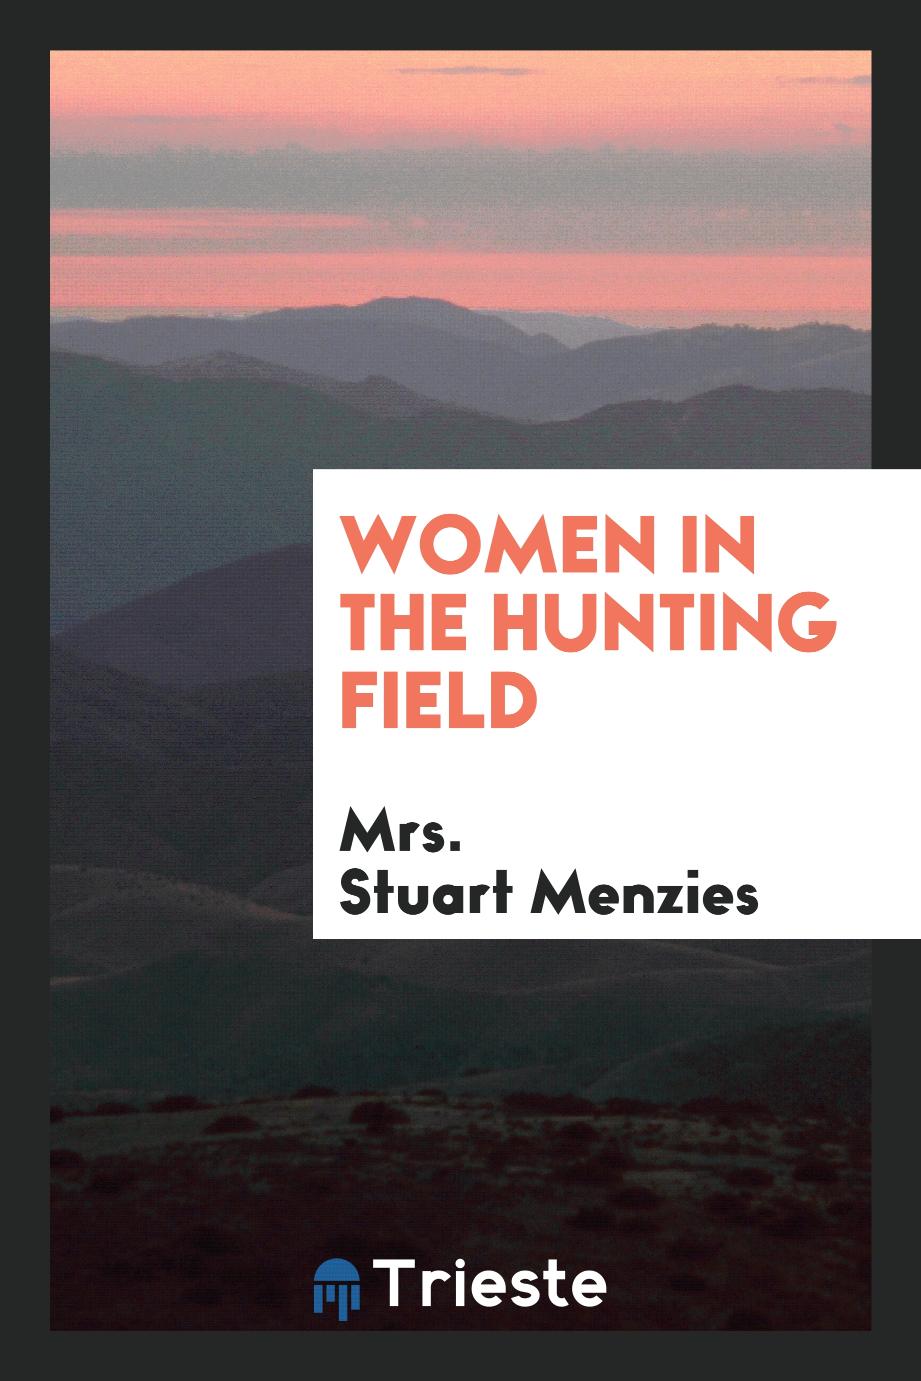 Women in the hunting field